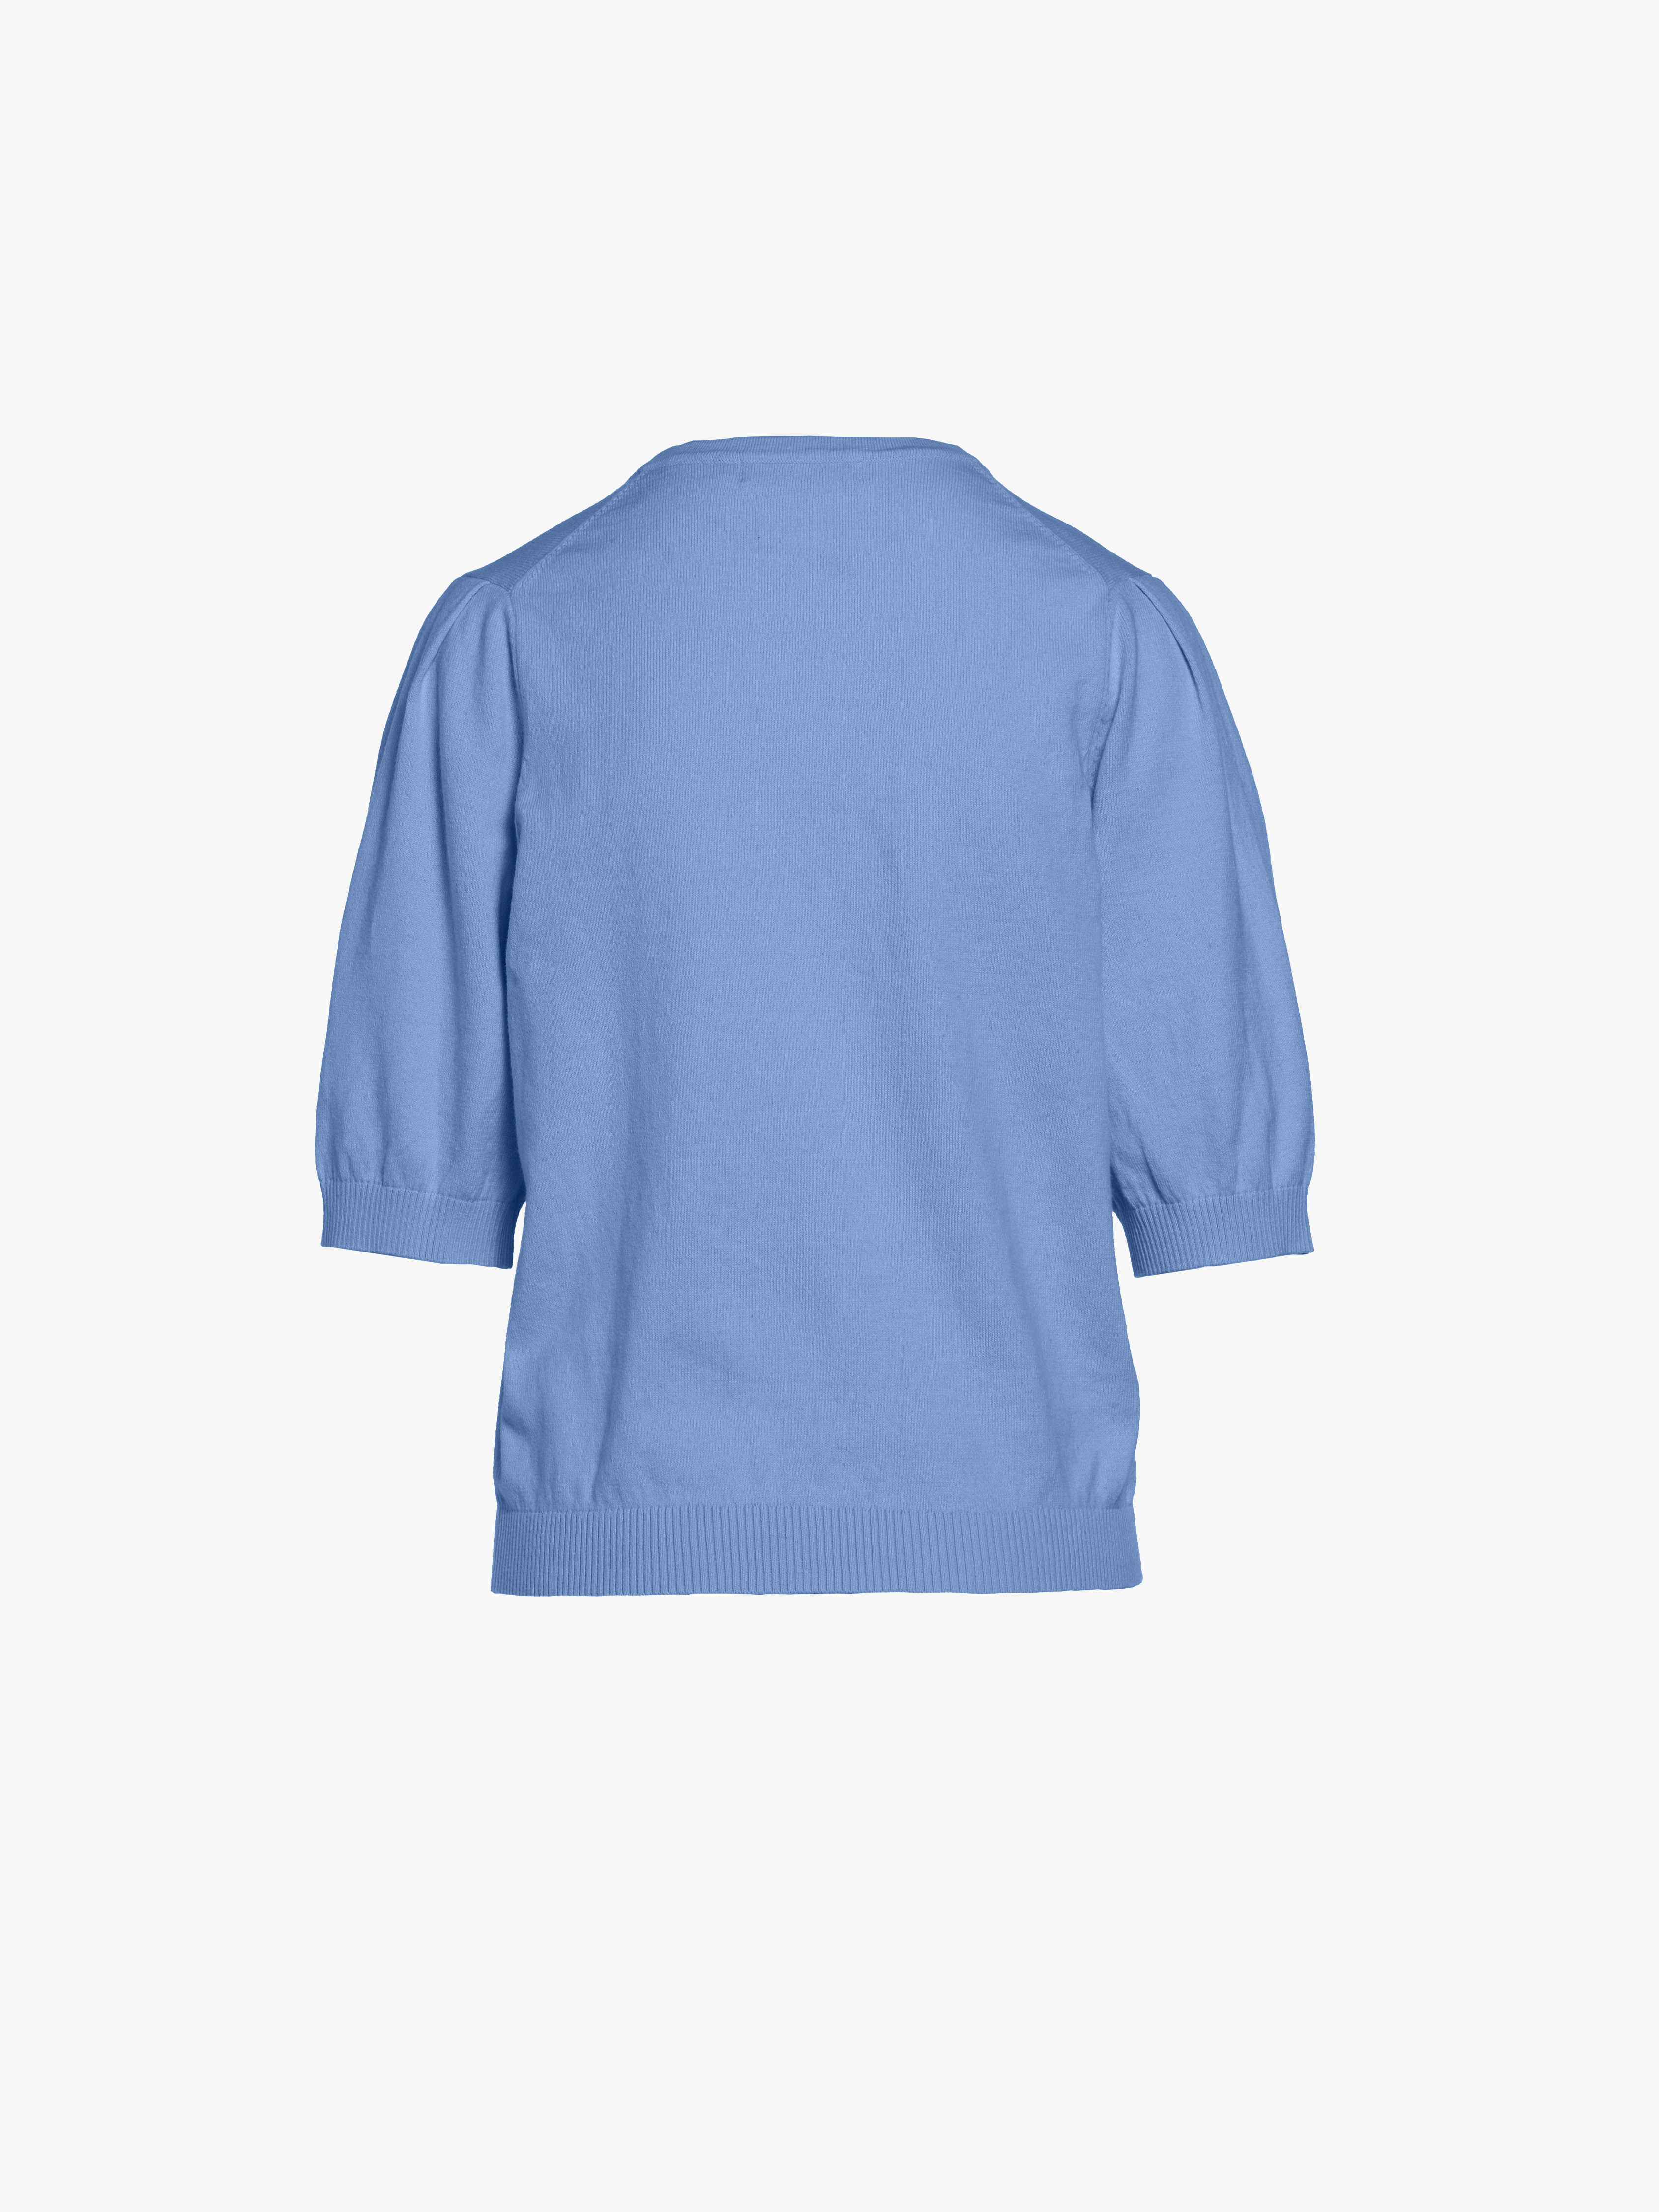 Beaumont Pullover Cotton-Cashmere V-Neck Short Sleeve Corn Blue